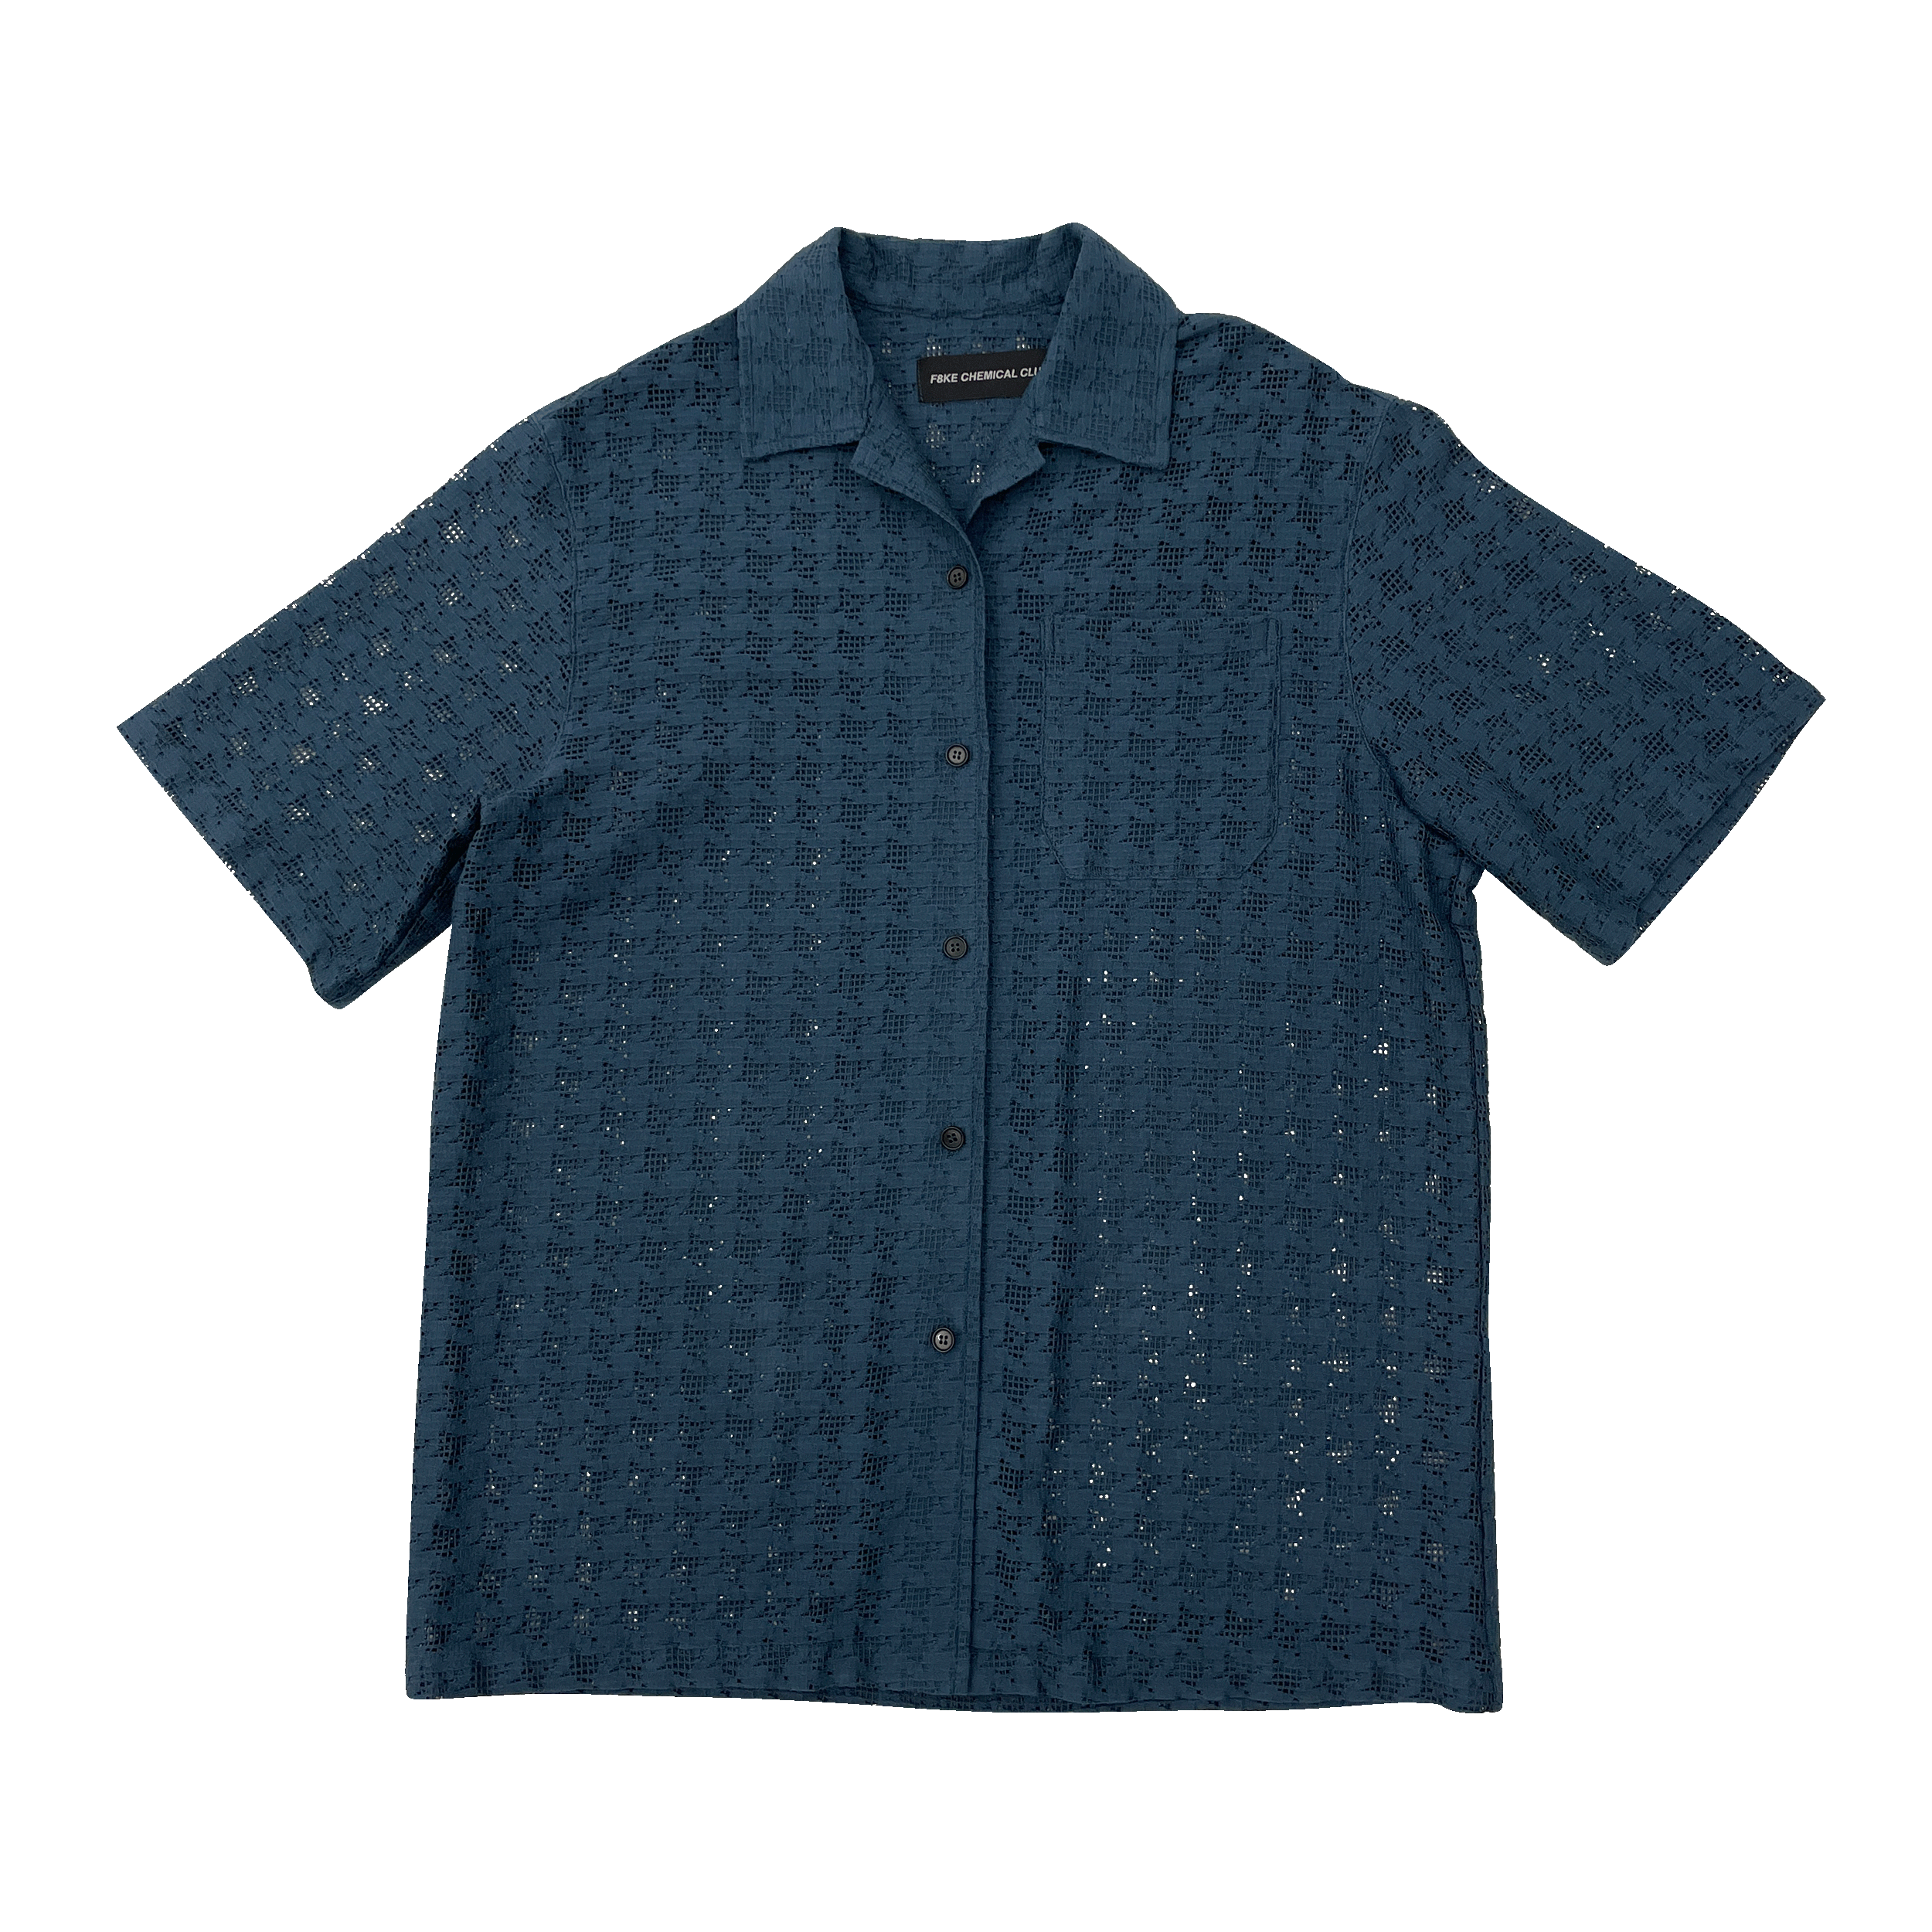 Peacock Blue Knit Shirt